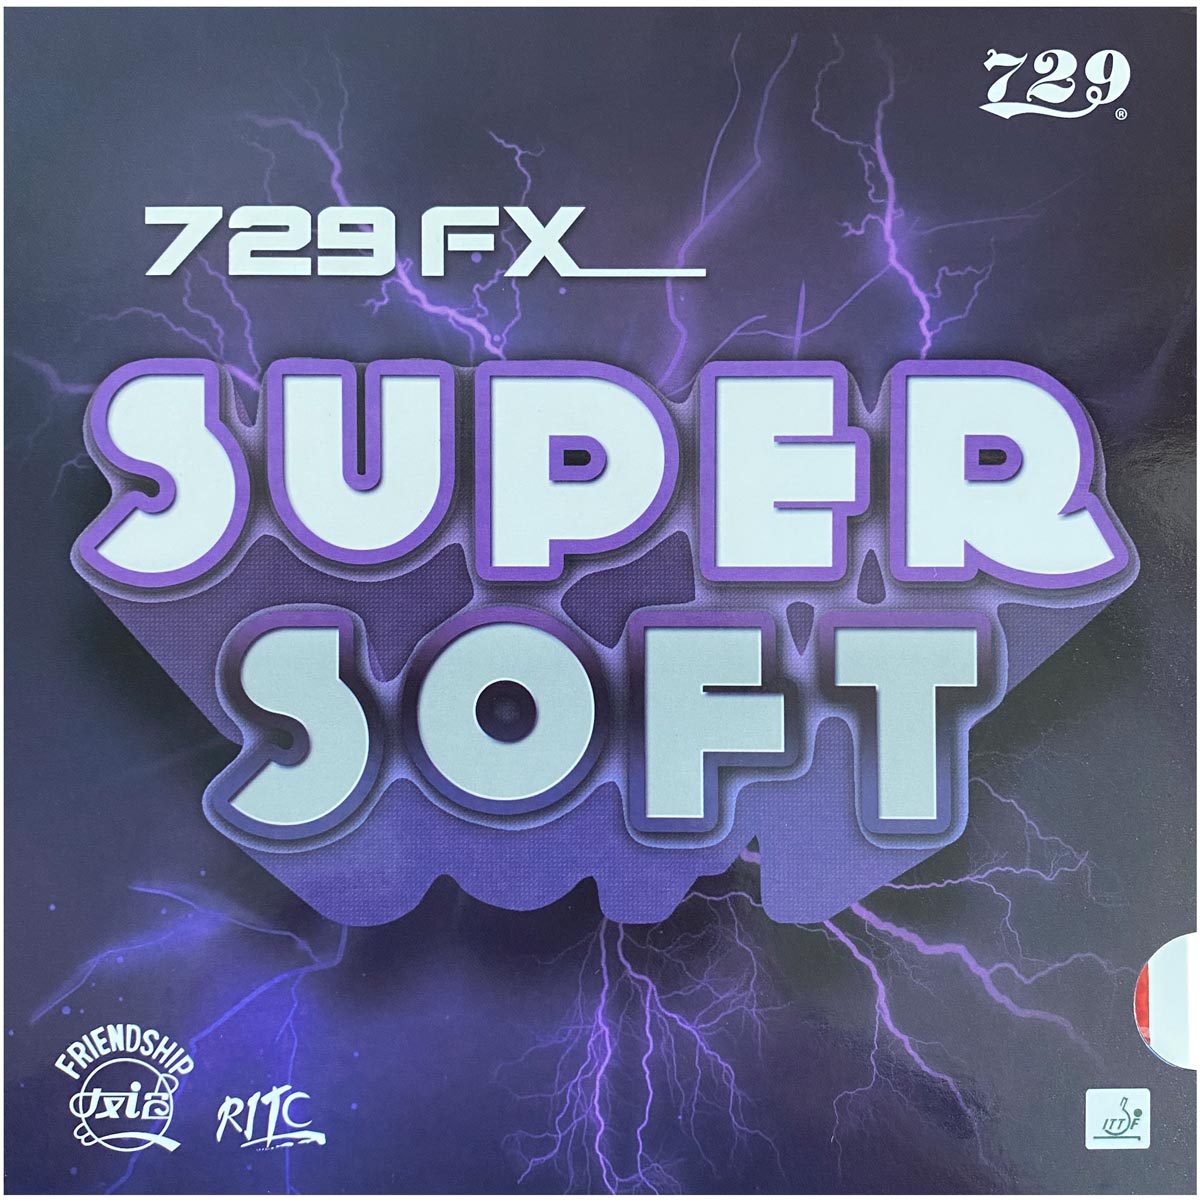 Friendship Rubber 729 FX Super Soft